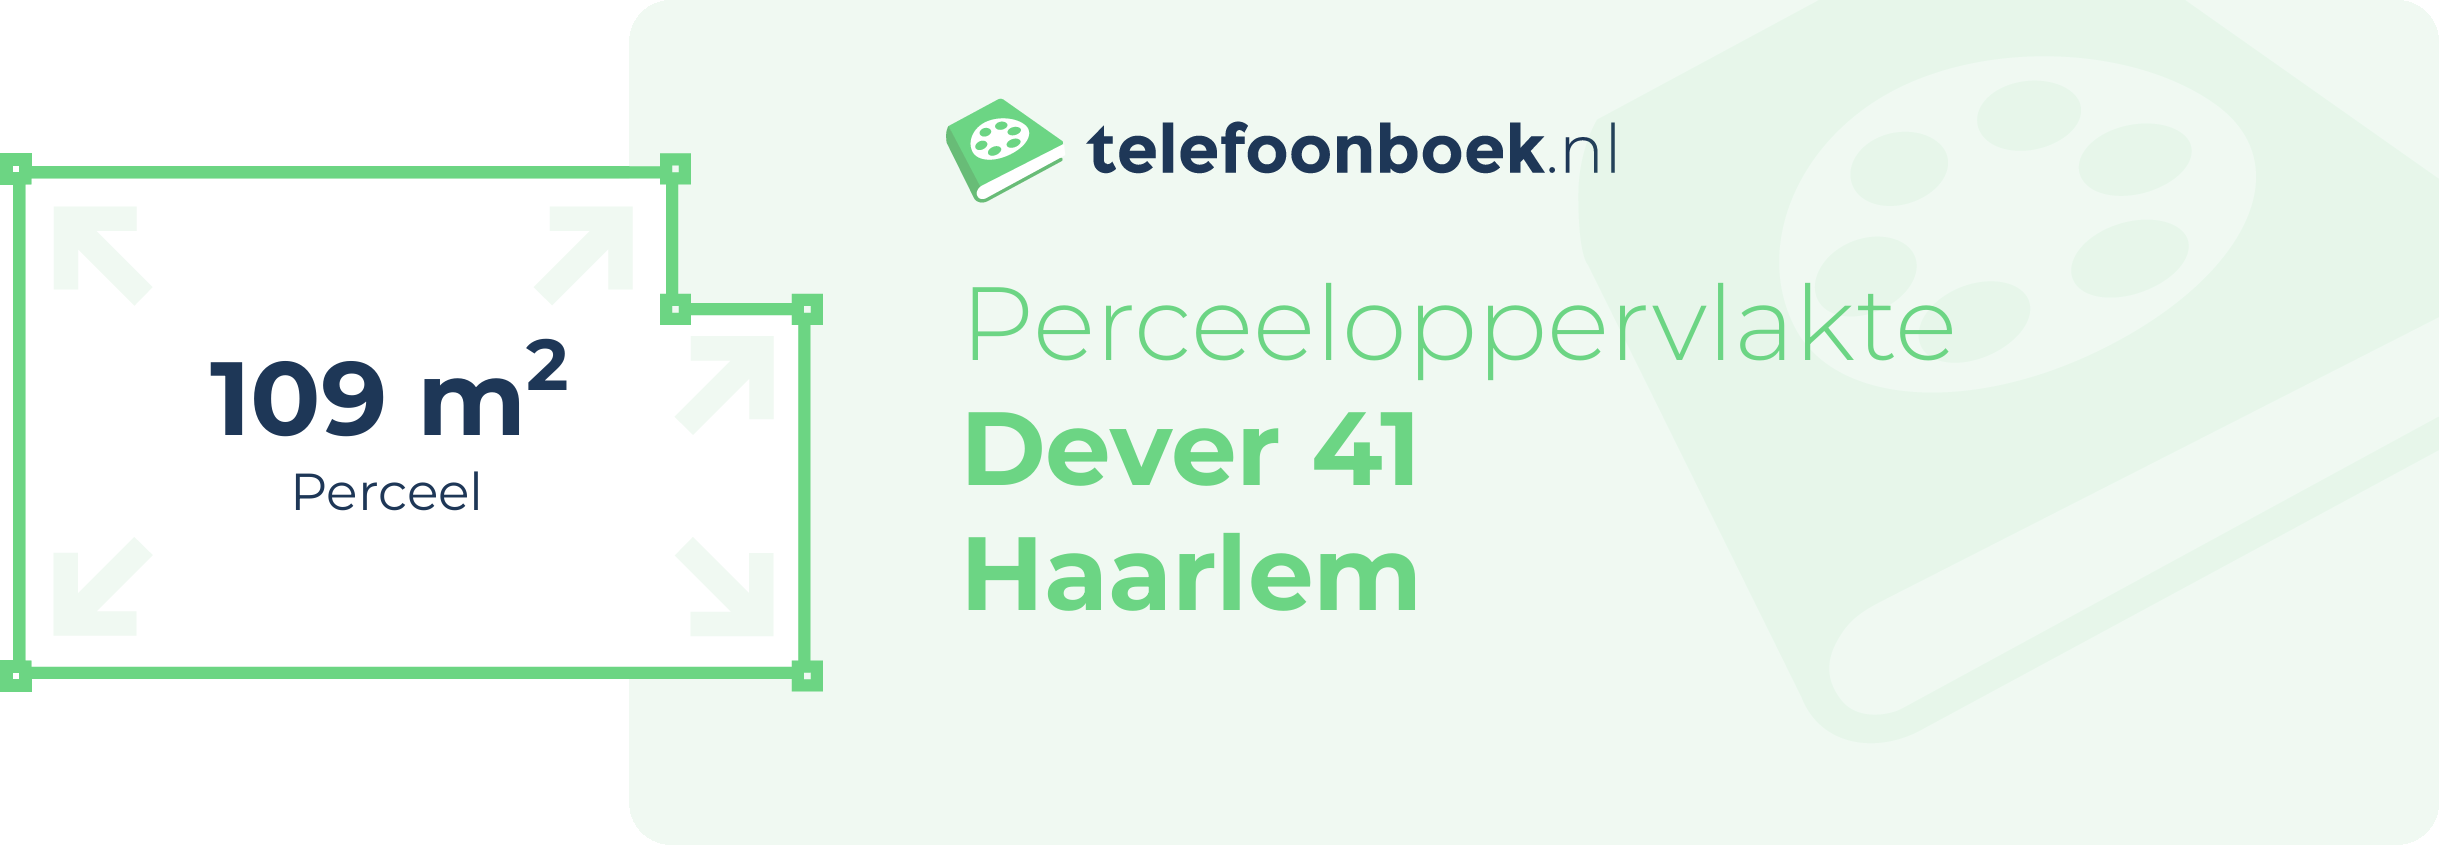 Perceeloppervlakte Dever 41 Haarlem